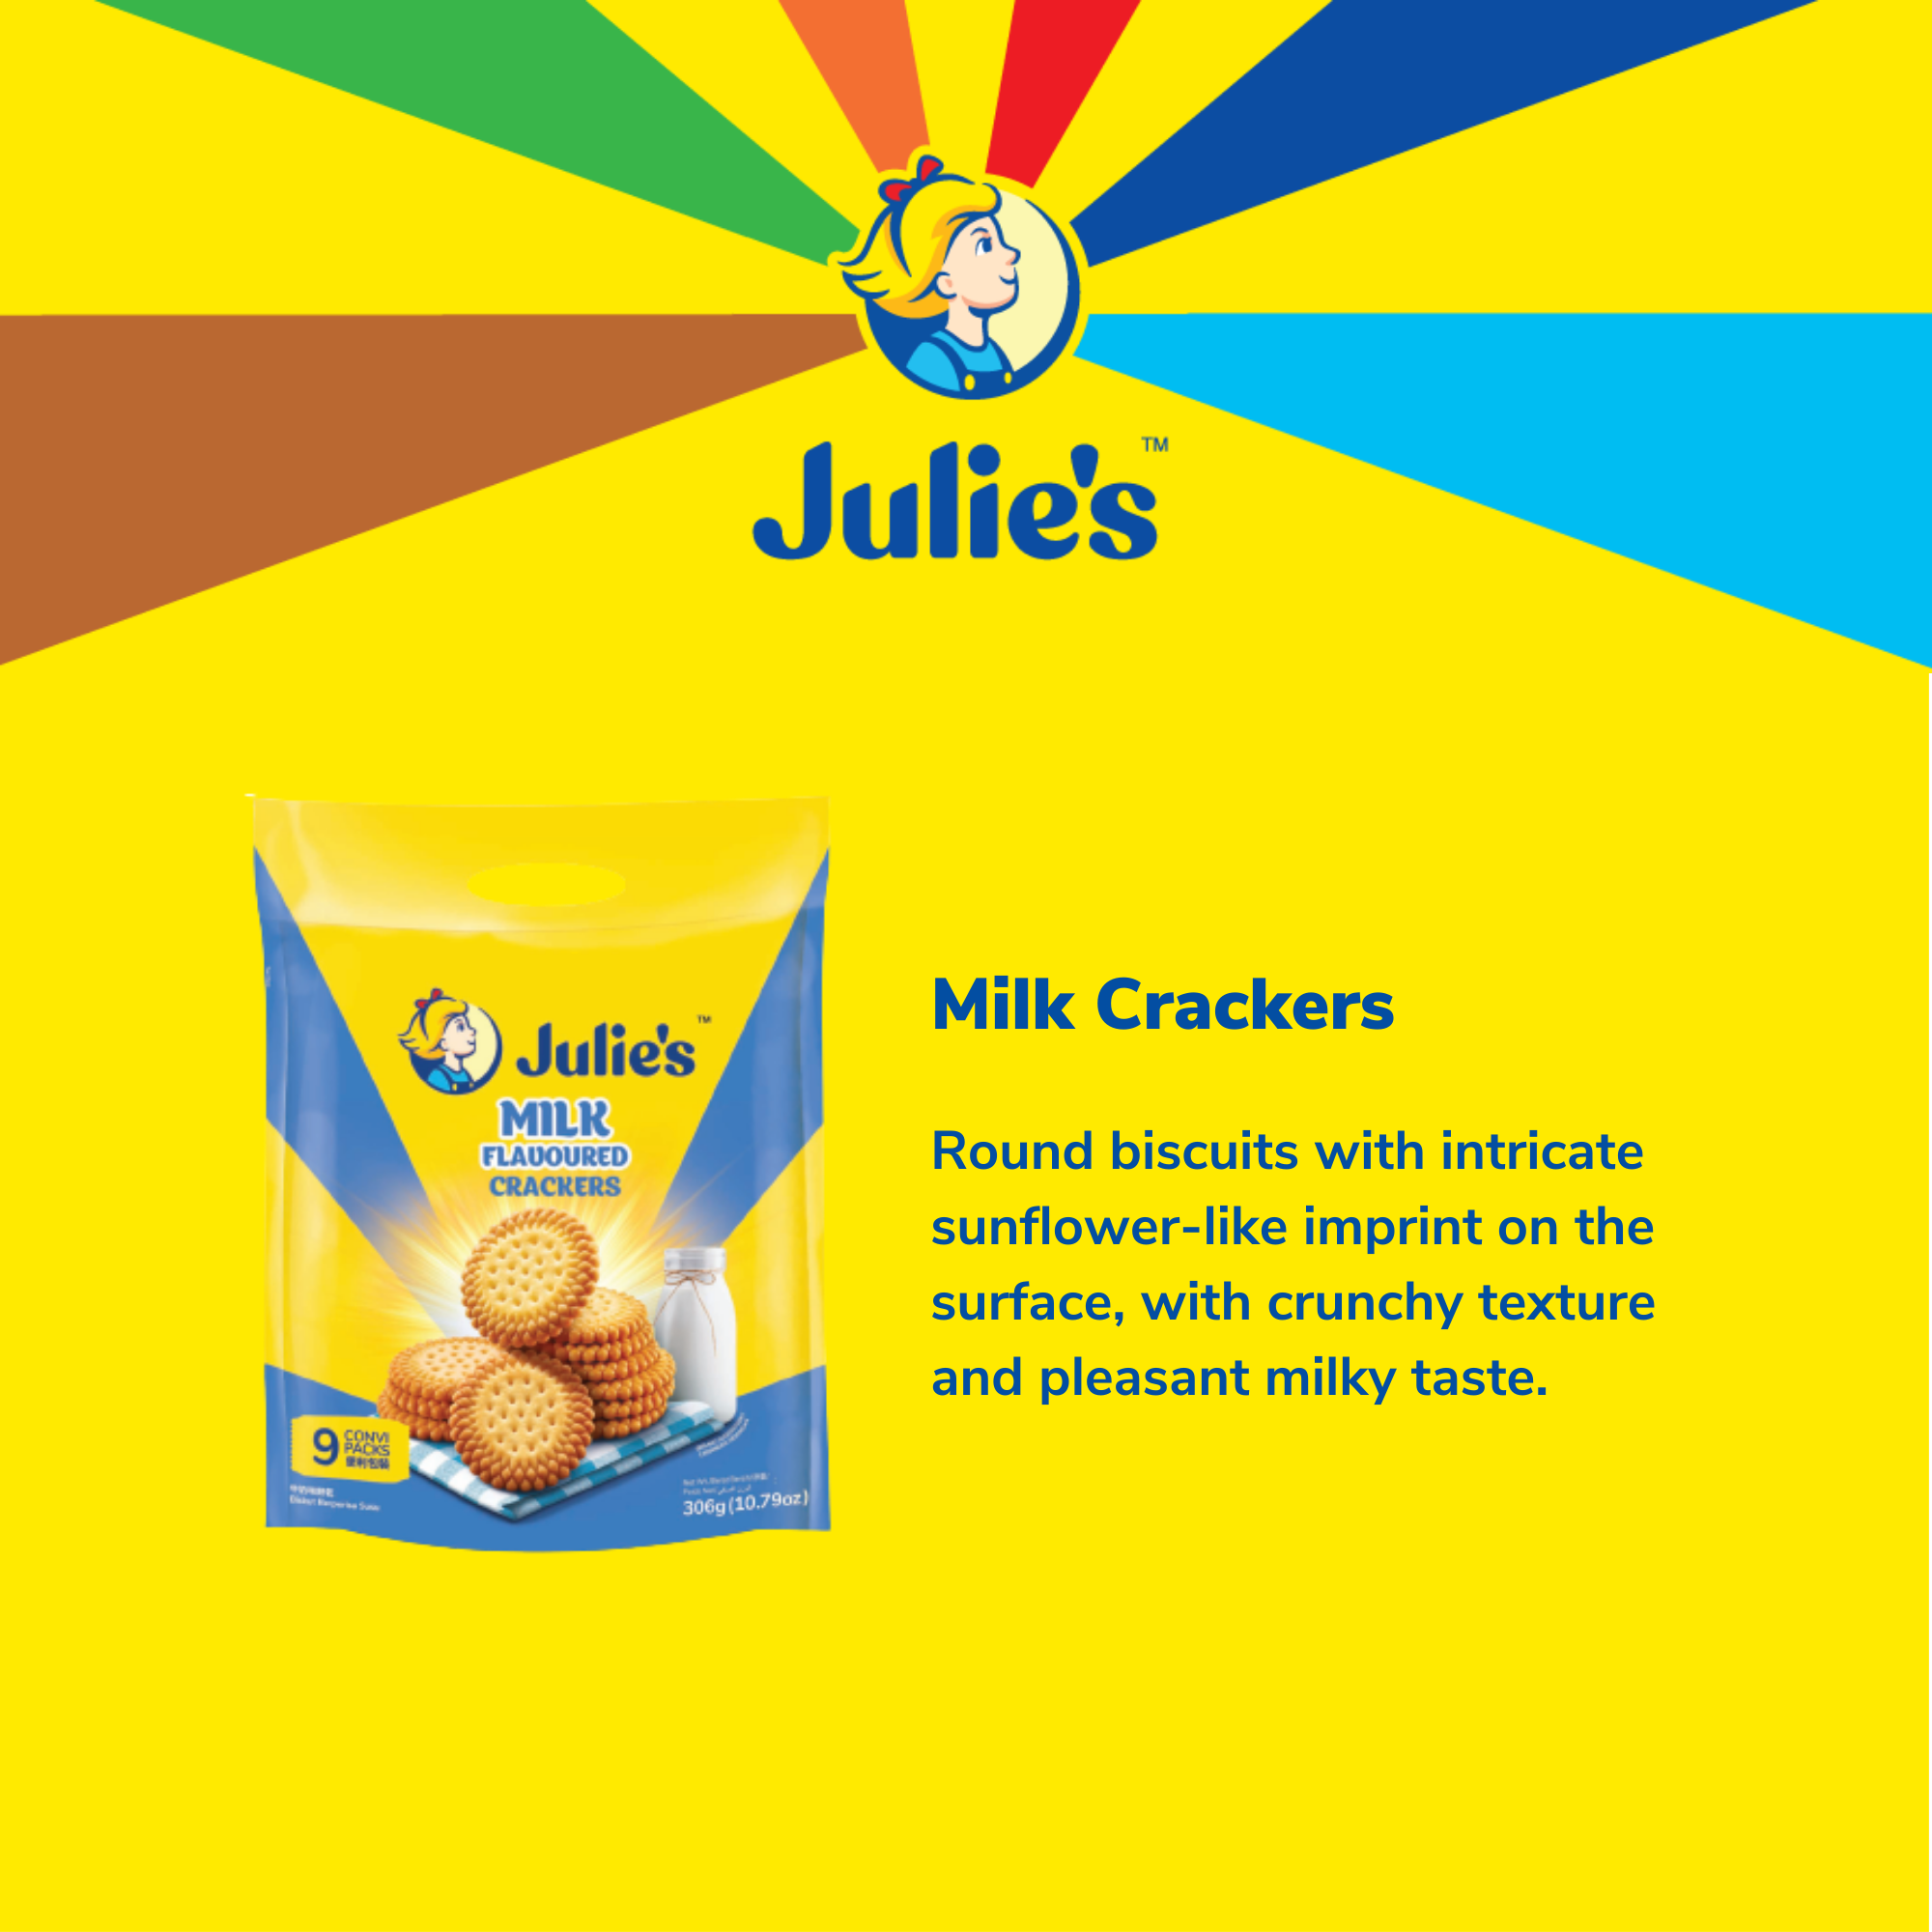 Julie's Milk Crackers 306g x 2 packs